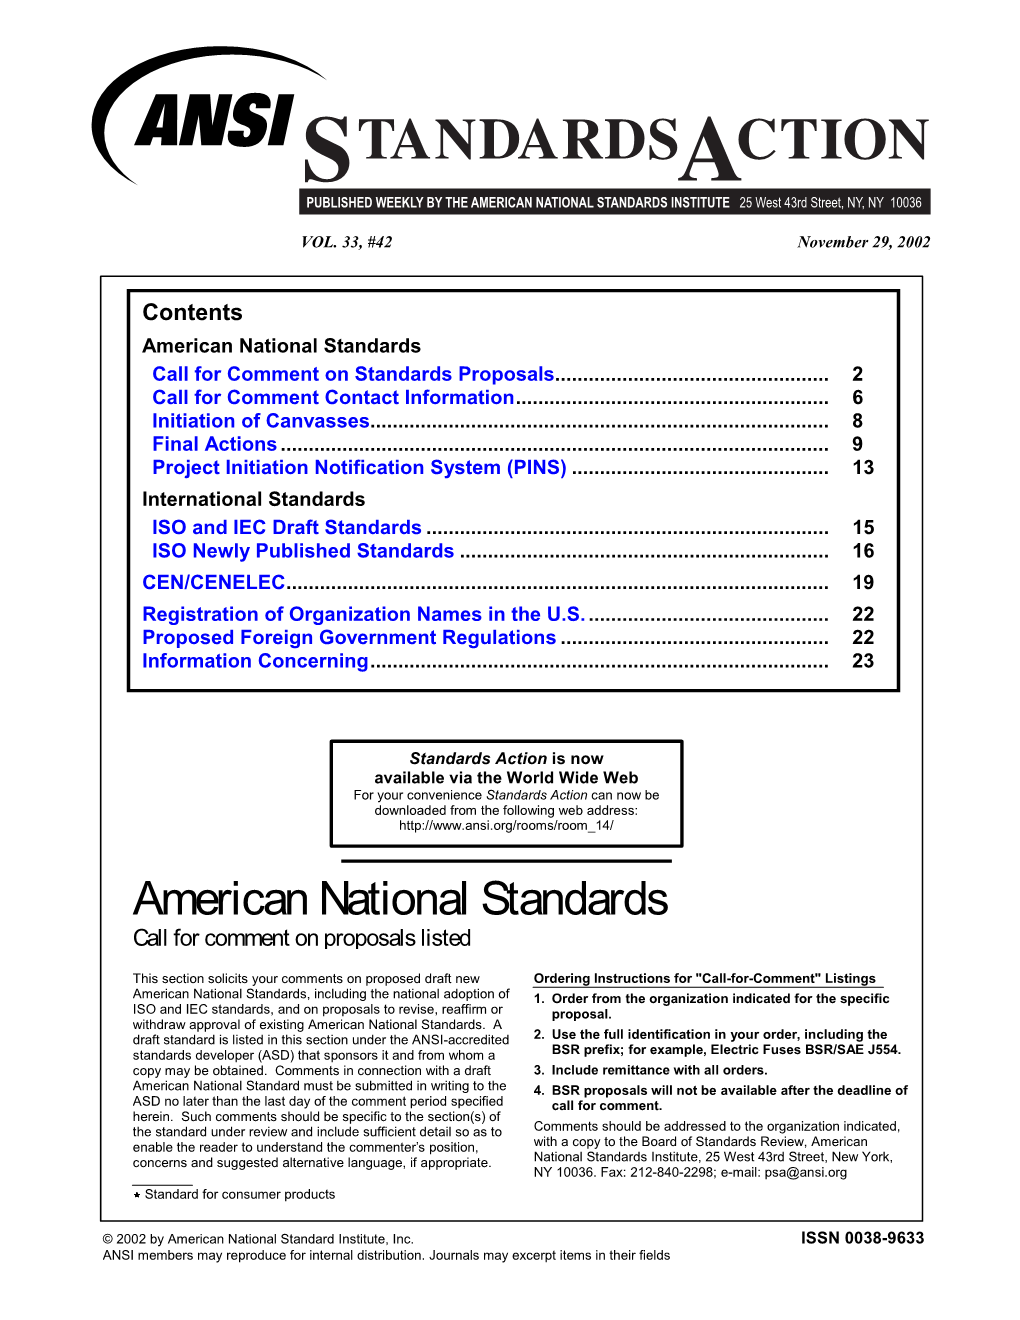 Standards Action Layout SAV3342